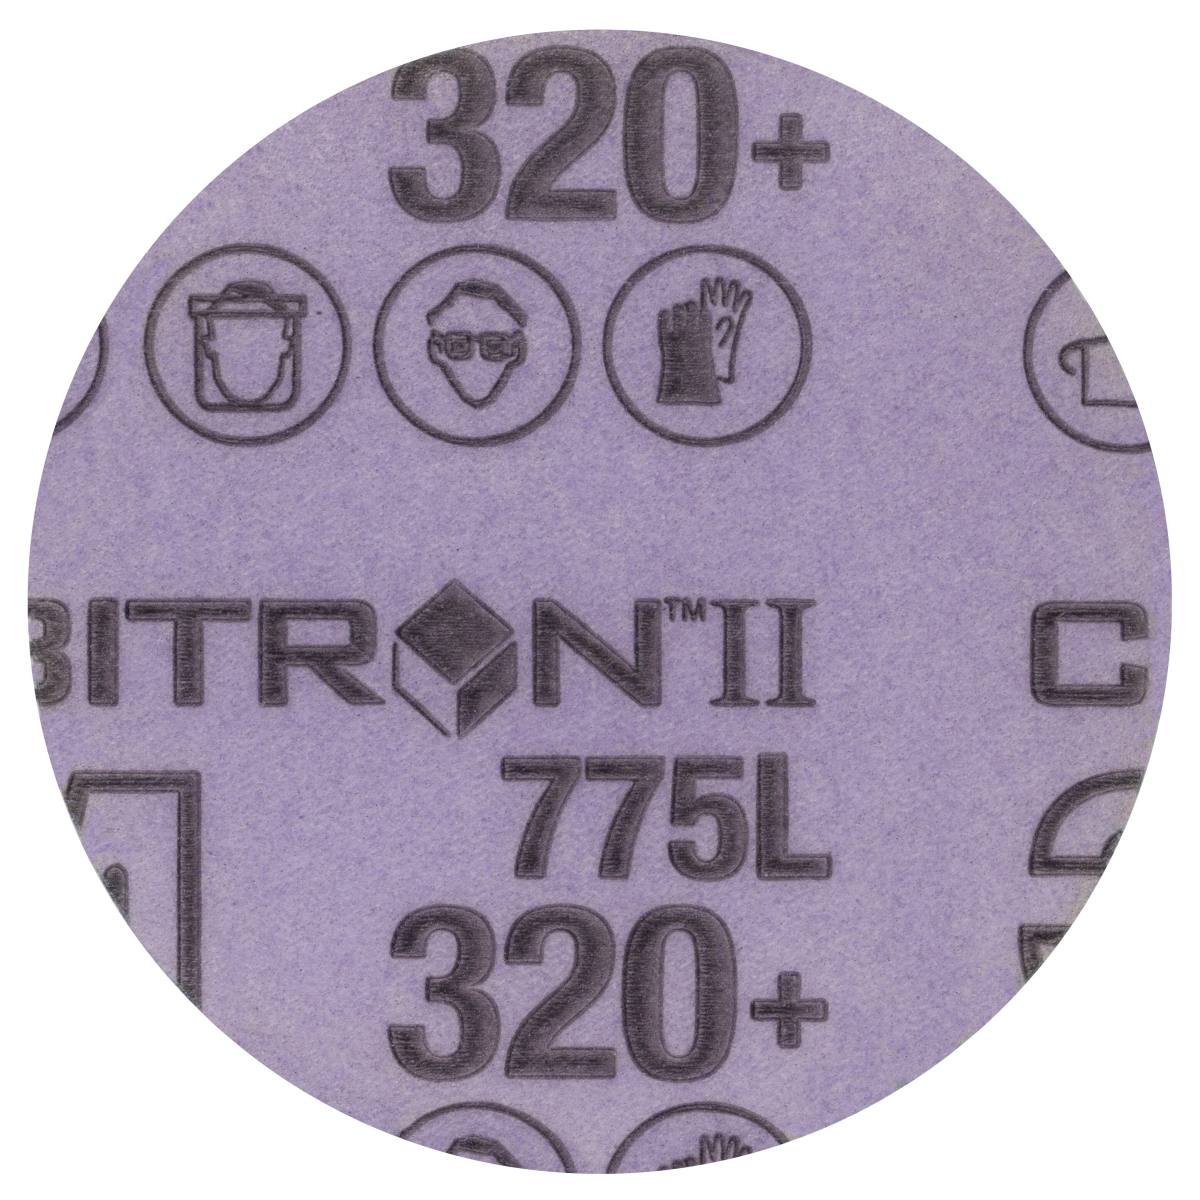 3M Cubitron II Disco de película Hookit 775L, 150 mm, 320+, sin perforar #47099